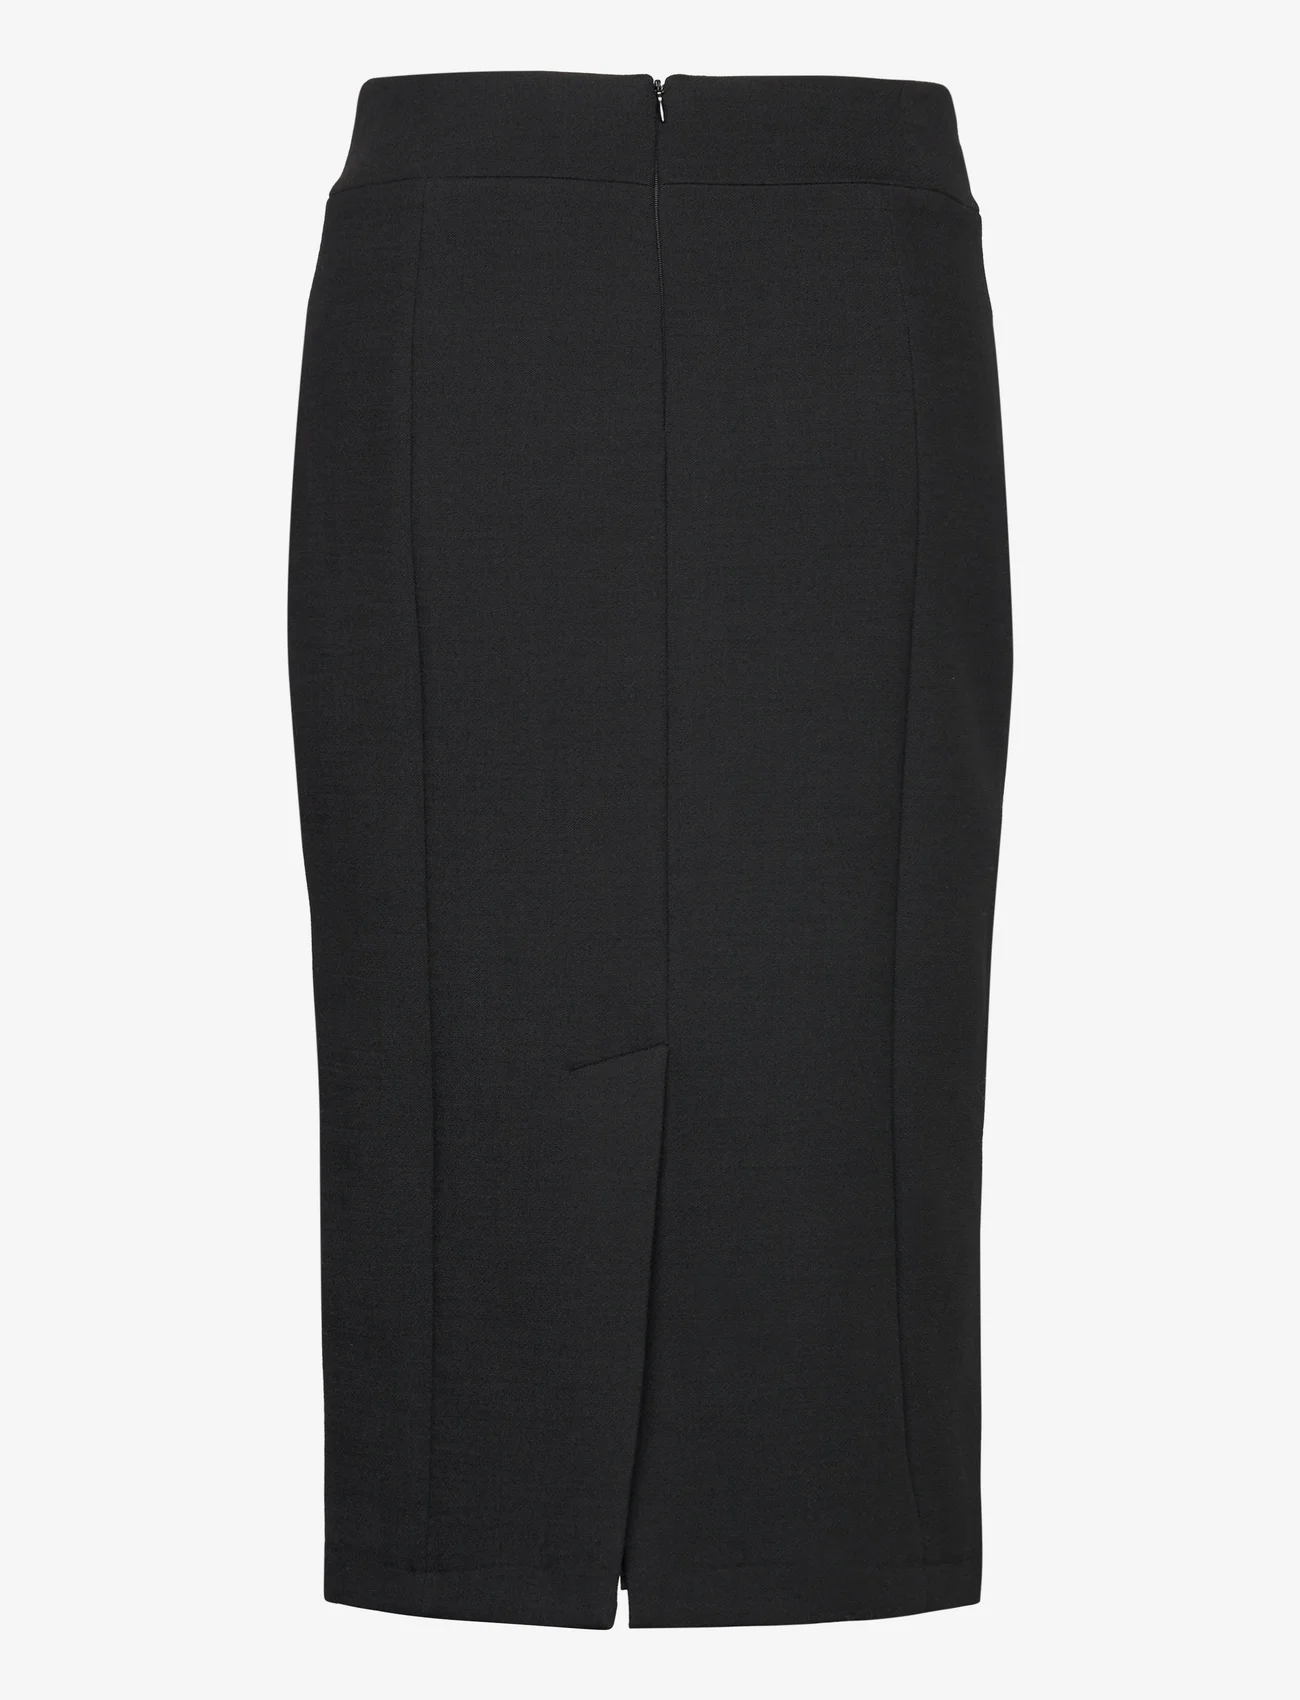 Andiata - Fibi 80 skirt - kynähameet - black - 1